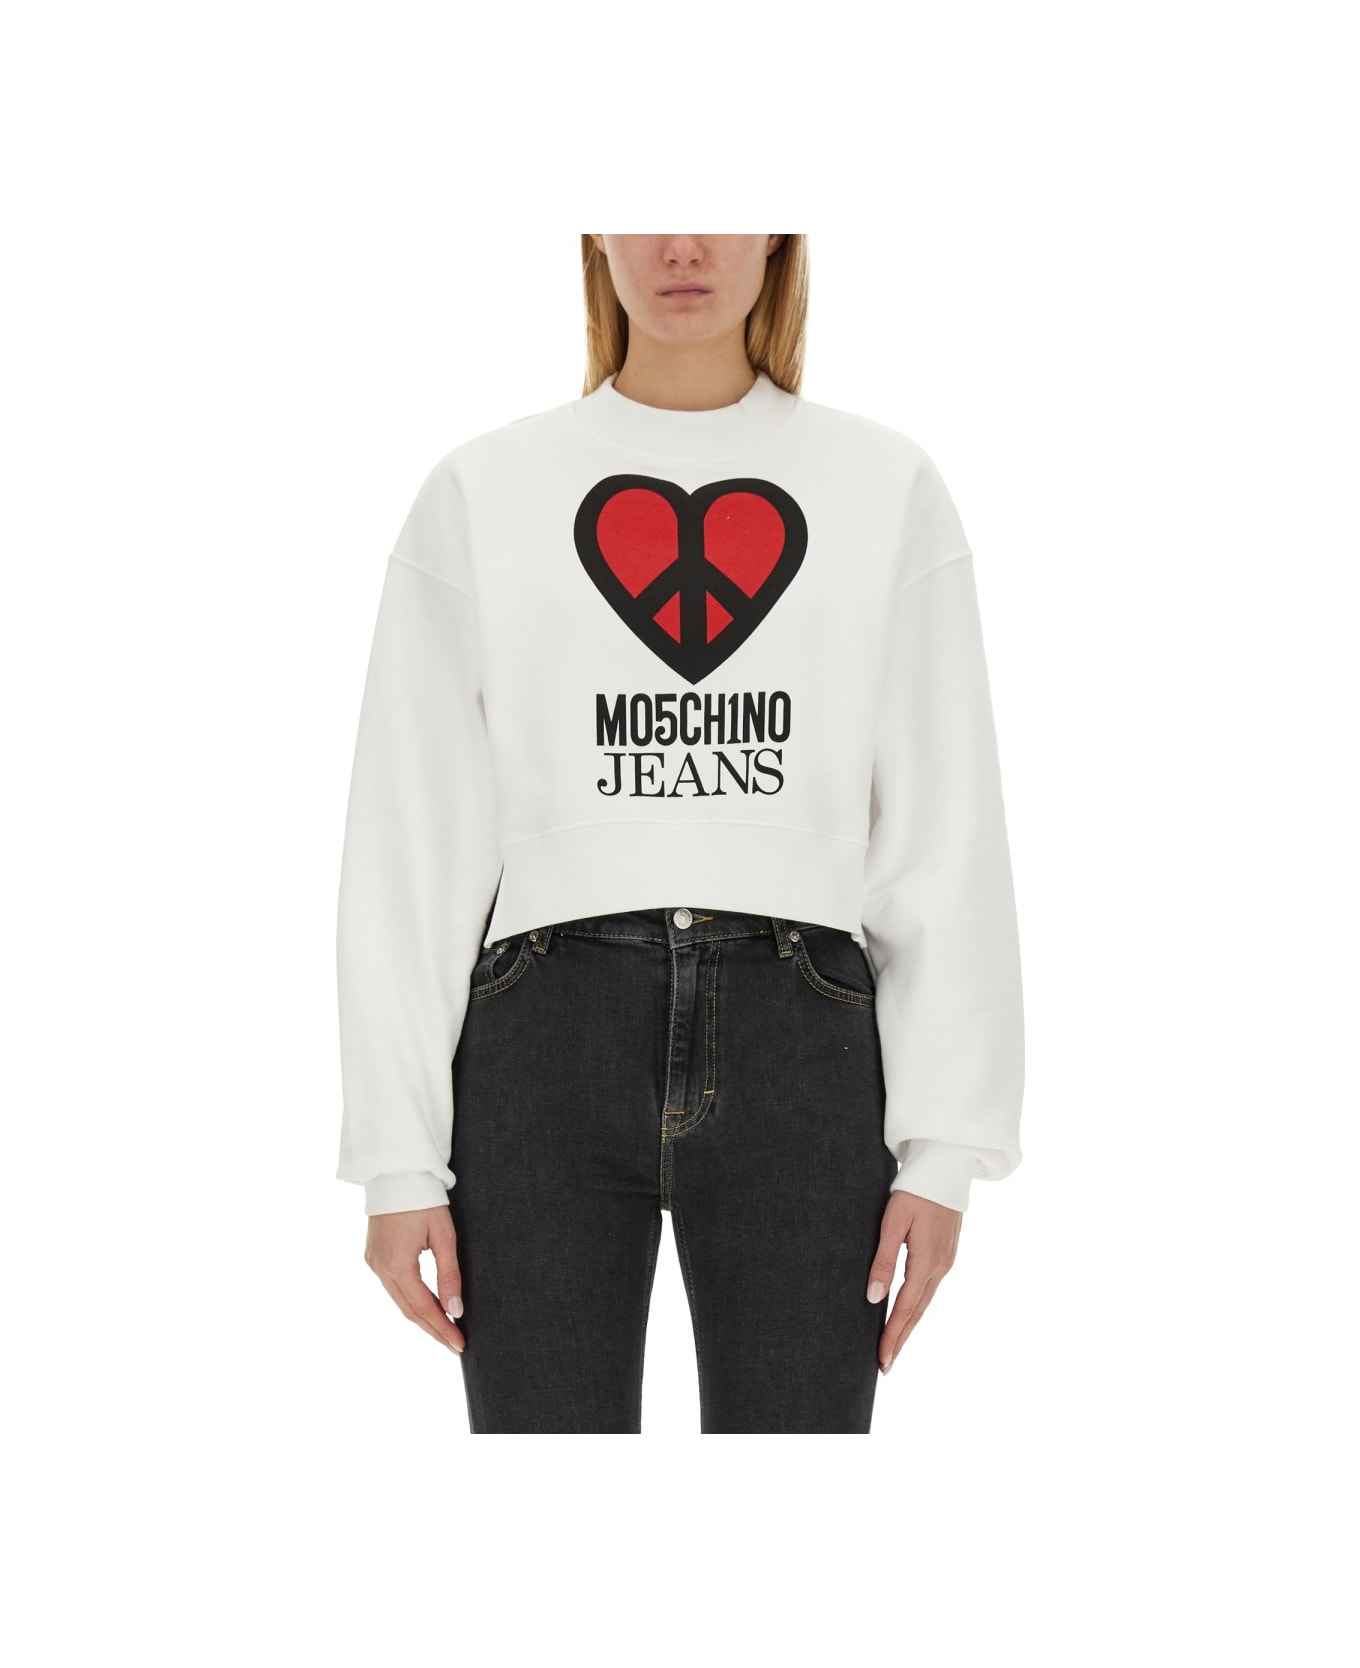 M05CH1N0 Jeans Sweatshirt With Logo - White